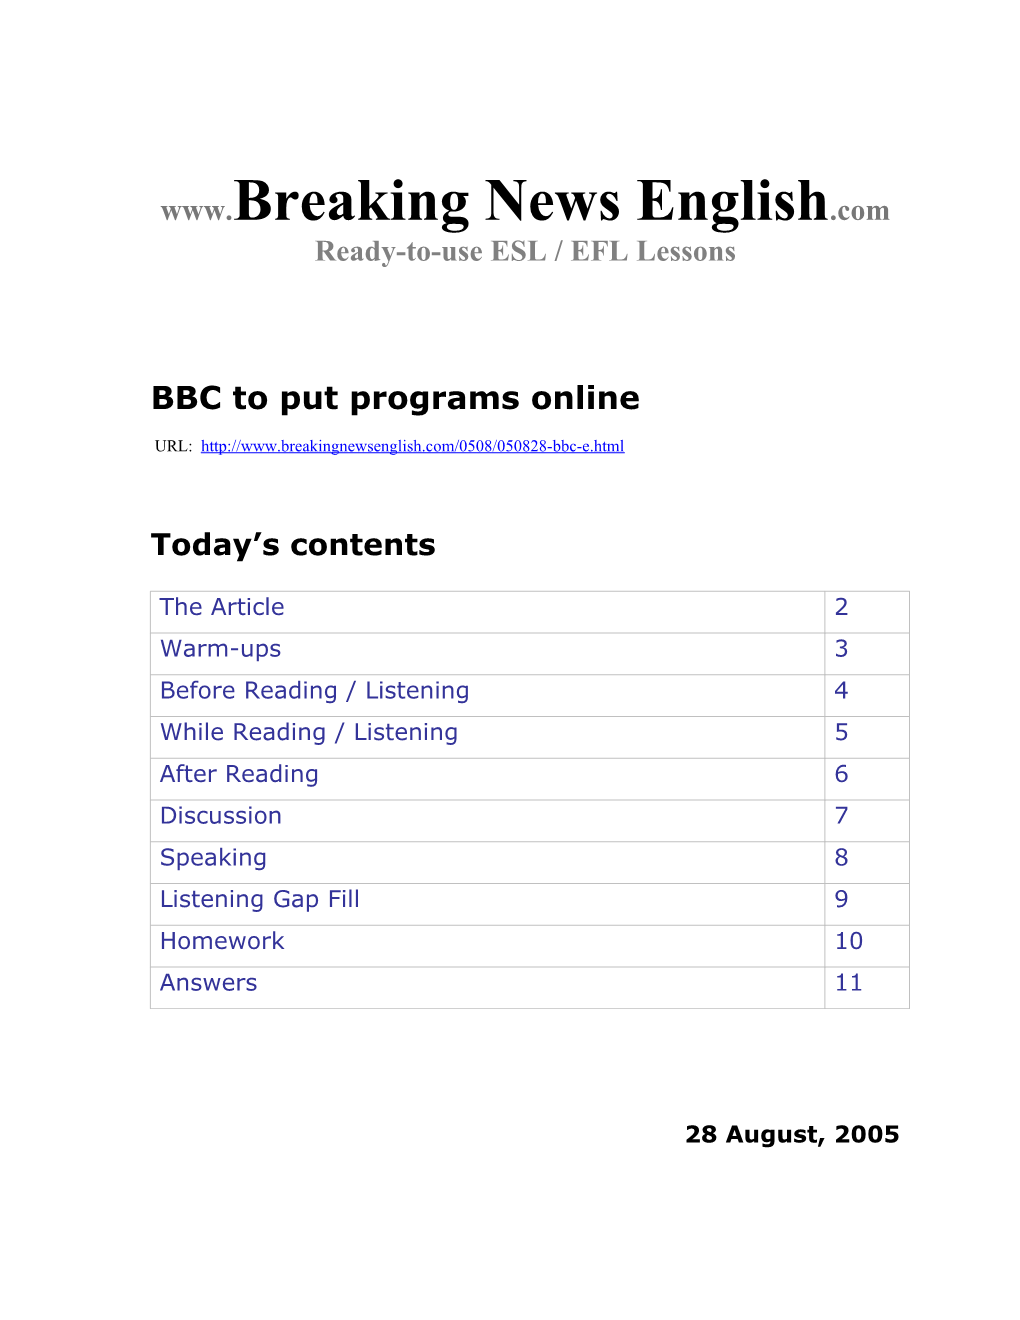 BBC to Put Programs Online